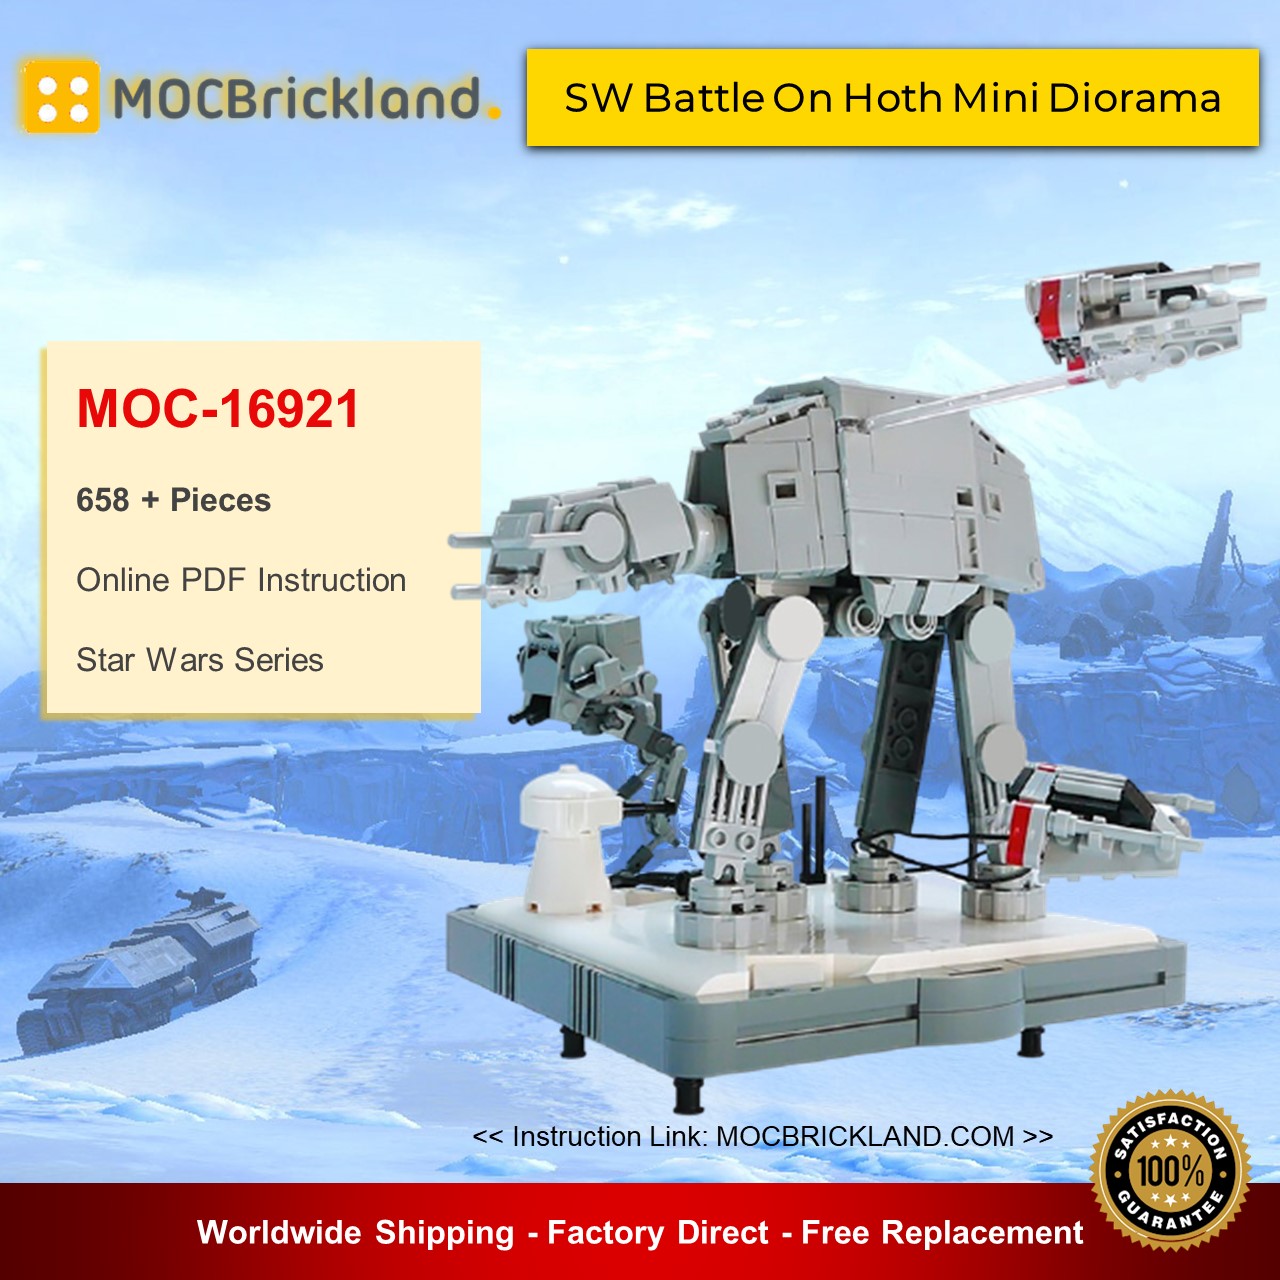 Star Wars Moc 16921 Sw Battle On Hoth Mini Diorama By Gol Mocbrickland Lepin Land Shop